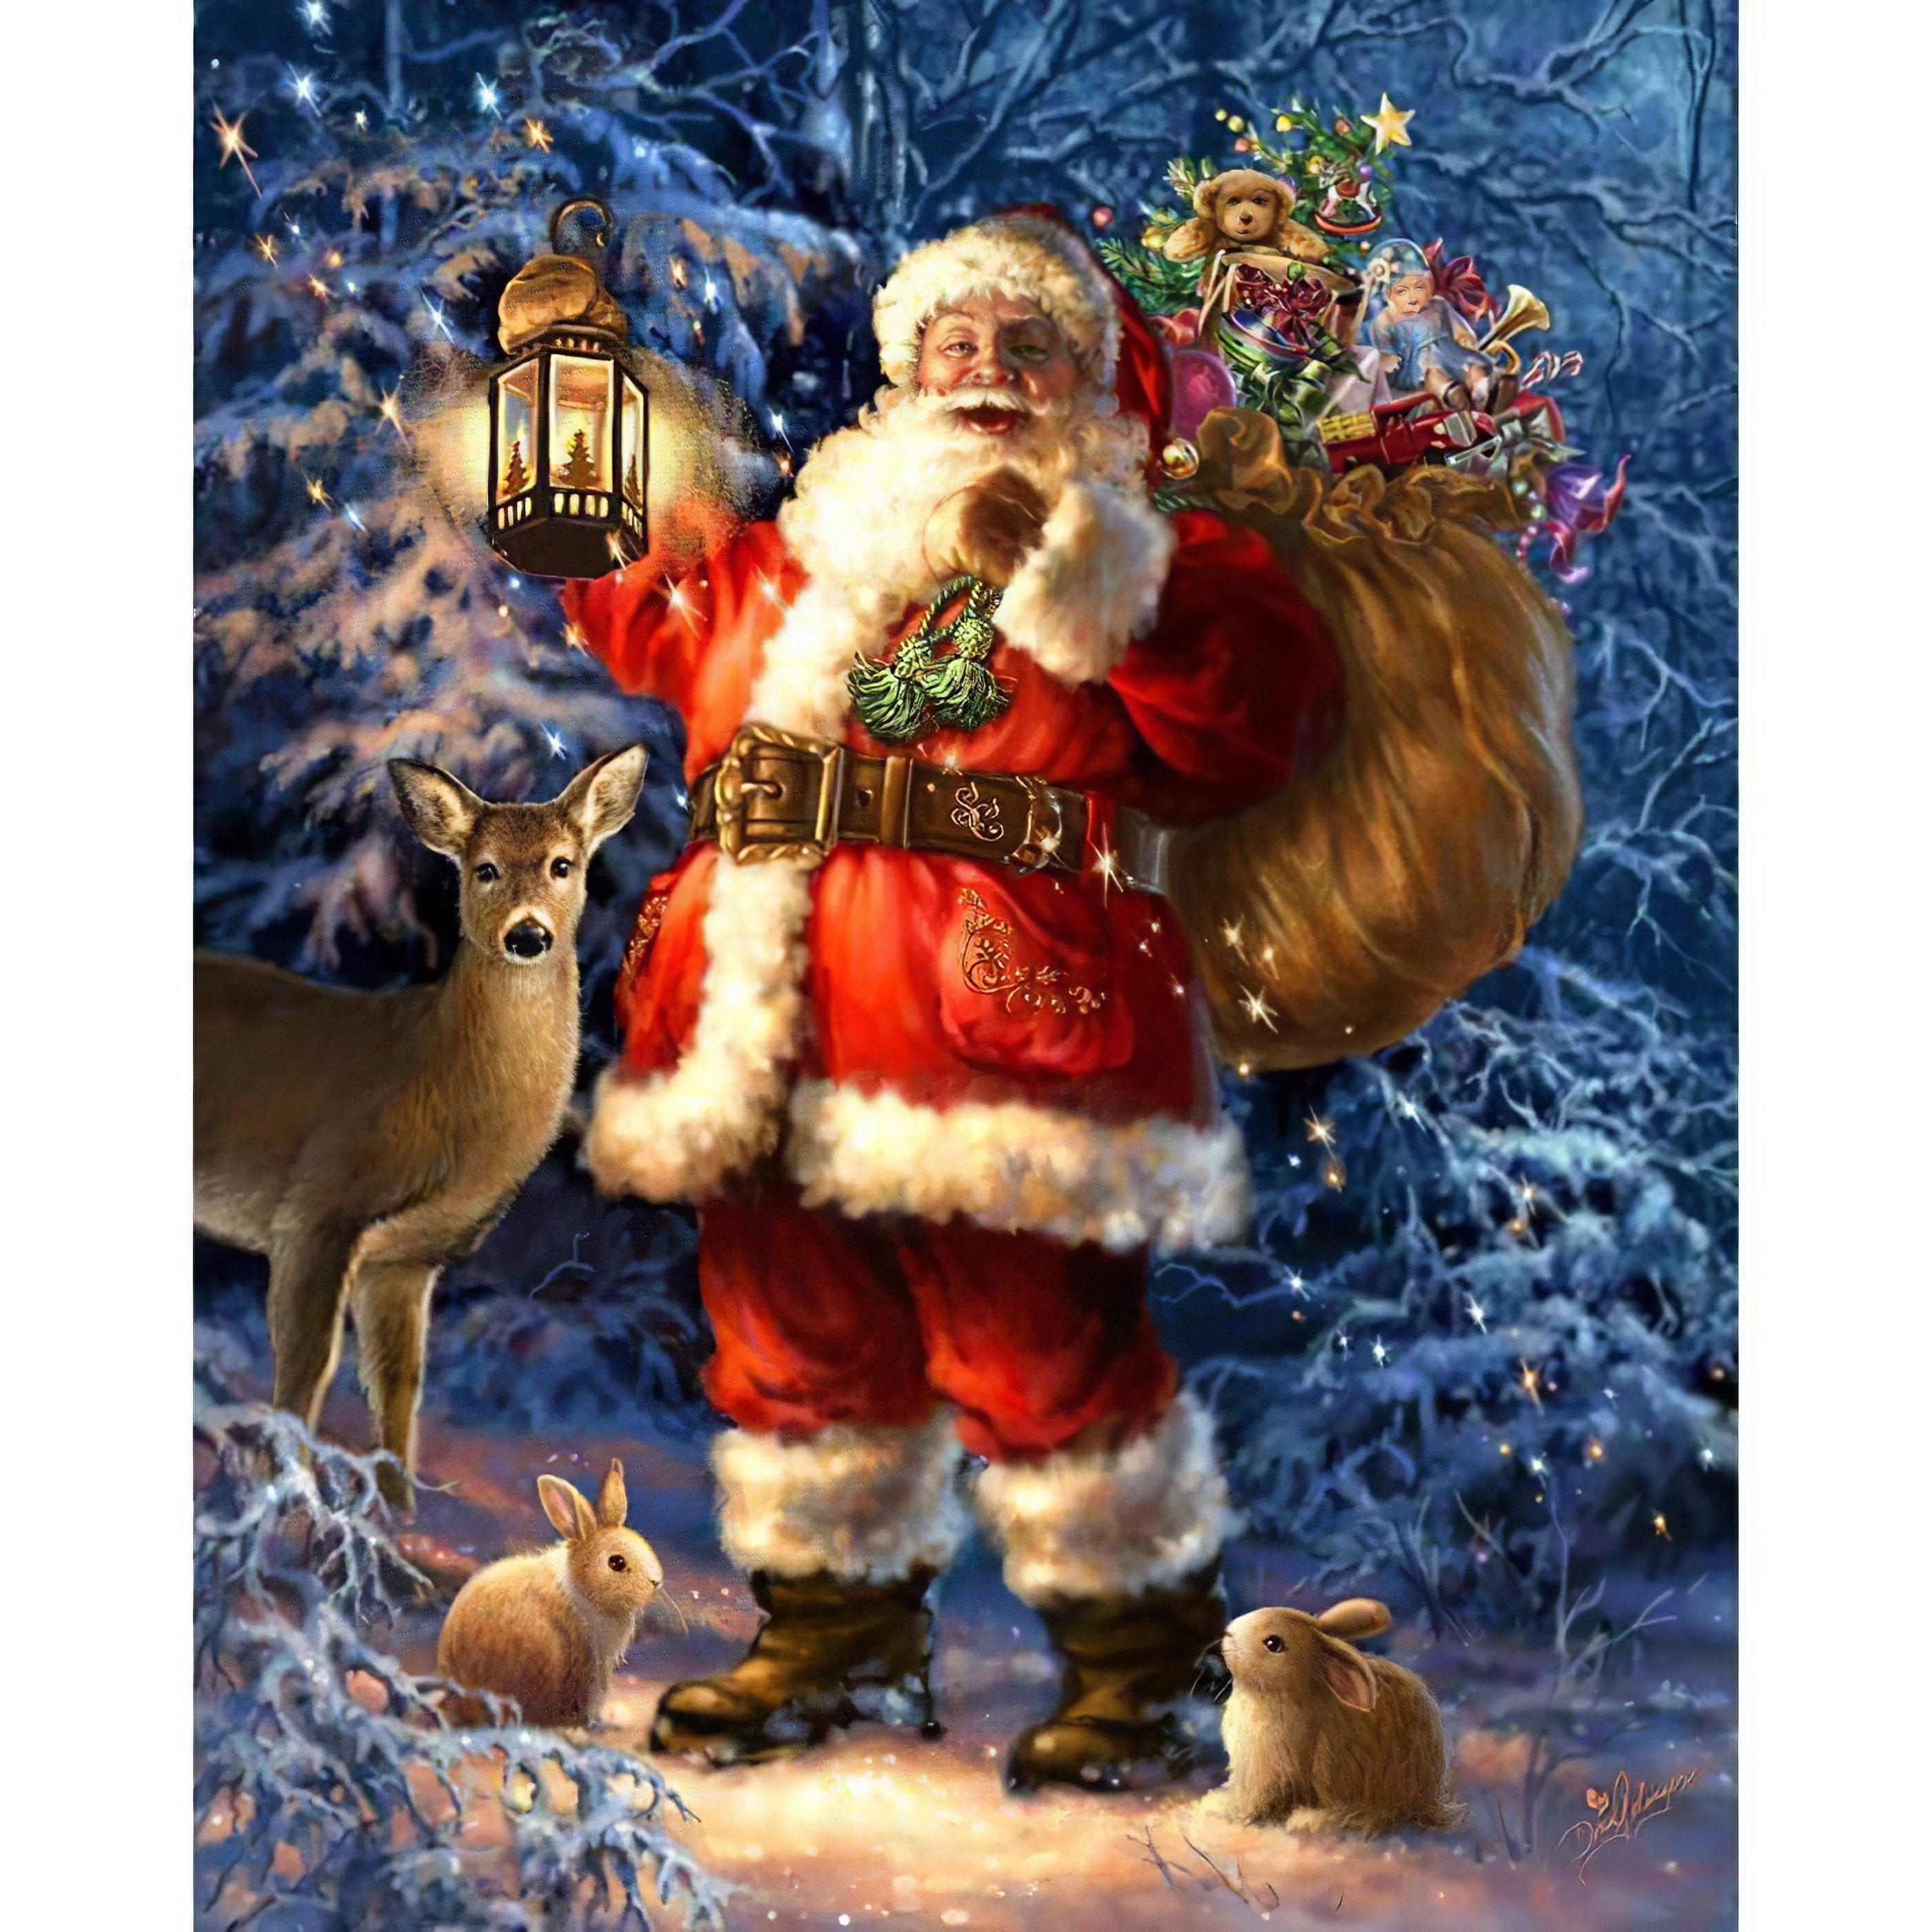 Join Santa and his loyal animal friends in a heartwarming holiday scene.Santa And His Animals - Diamondartlove